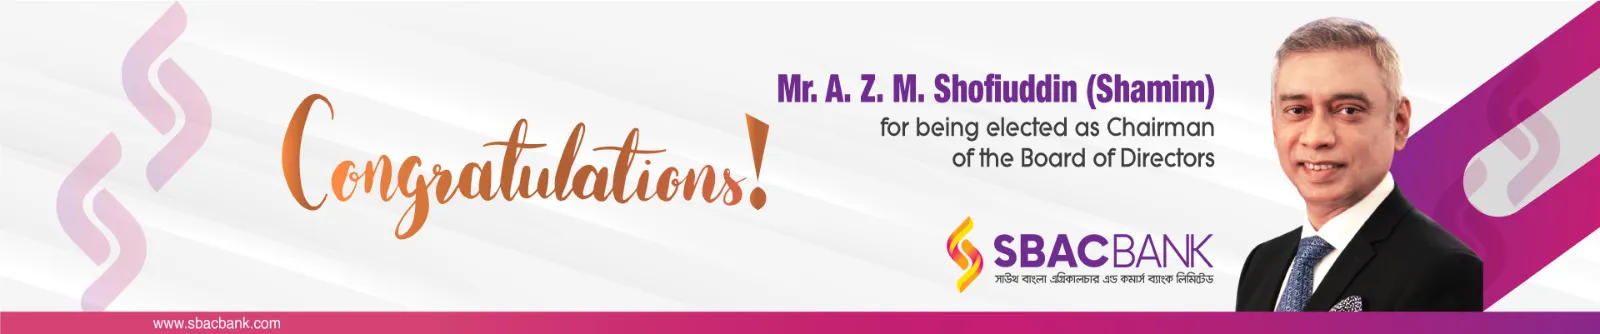 SBAC Mr. A. Z. M. Shofiuddin (Shamim), New Chairman of SBAC Bank Ltd.